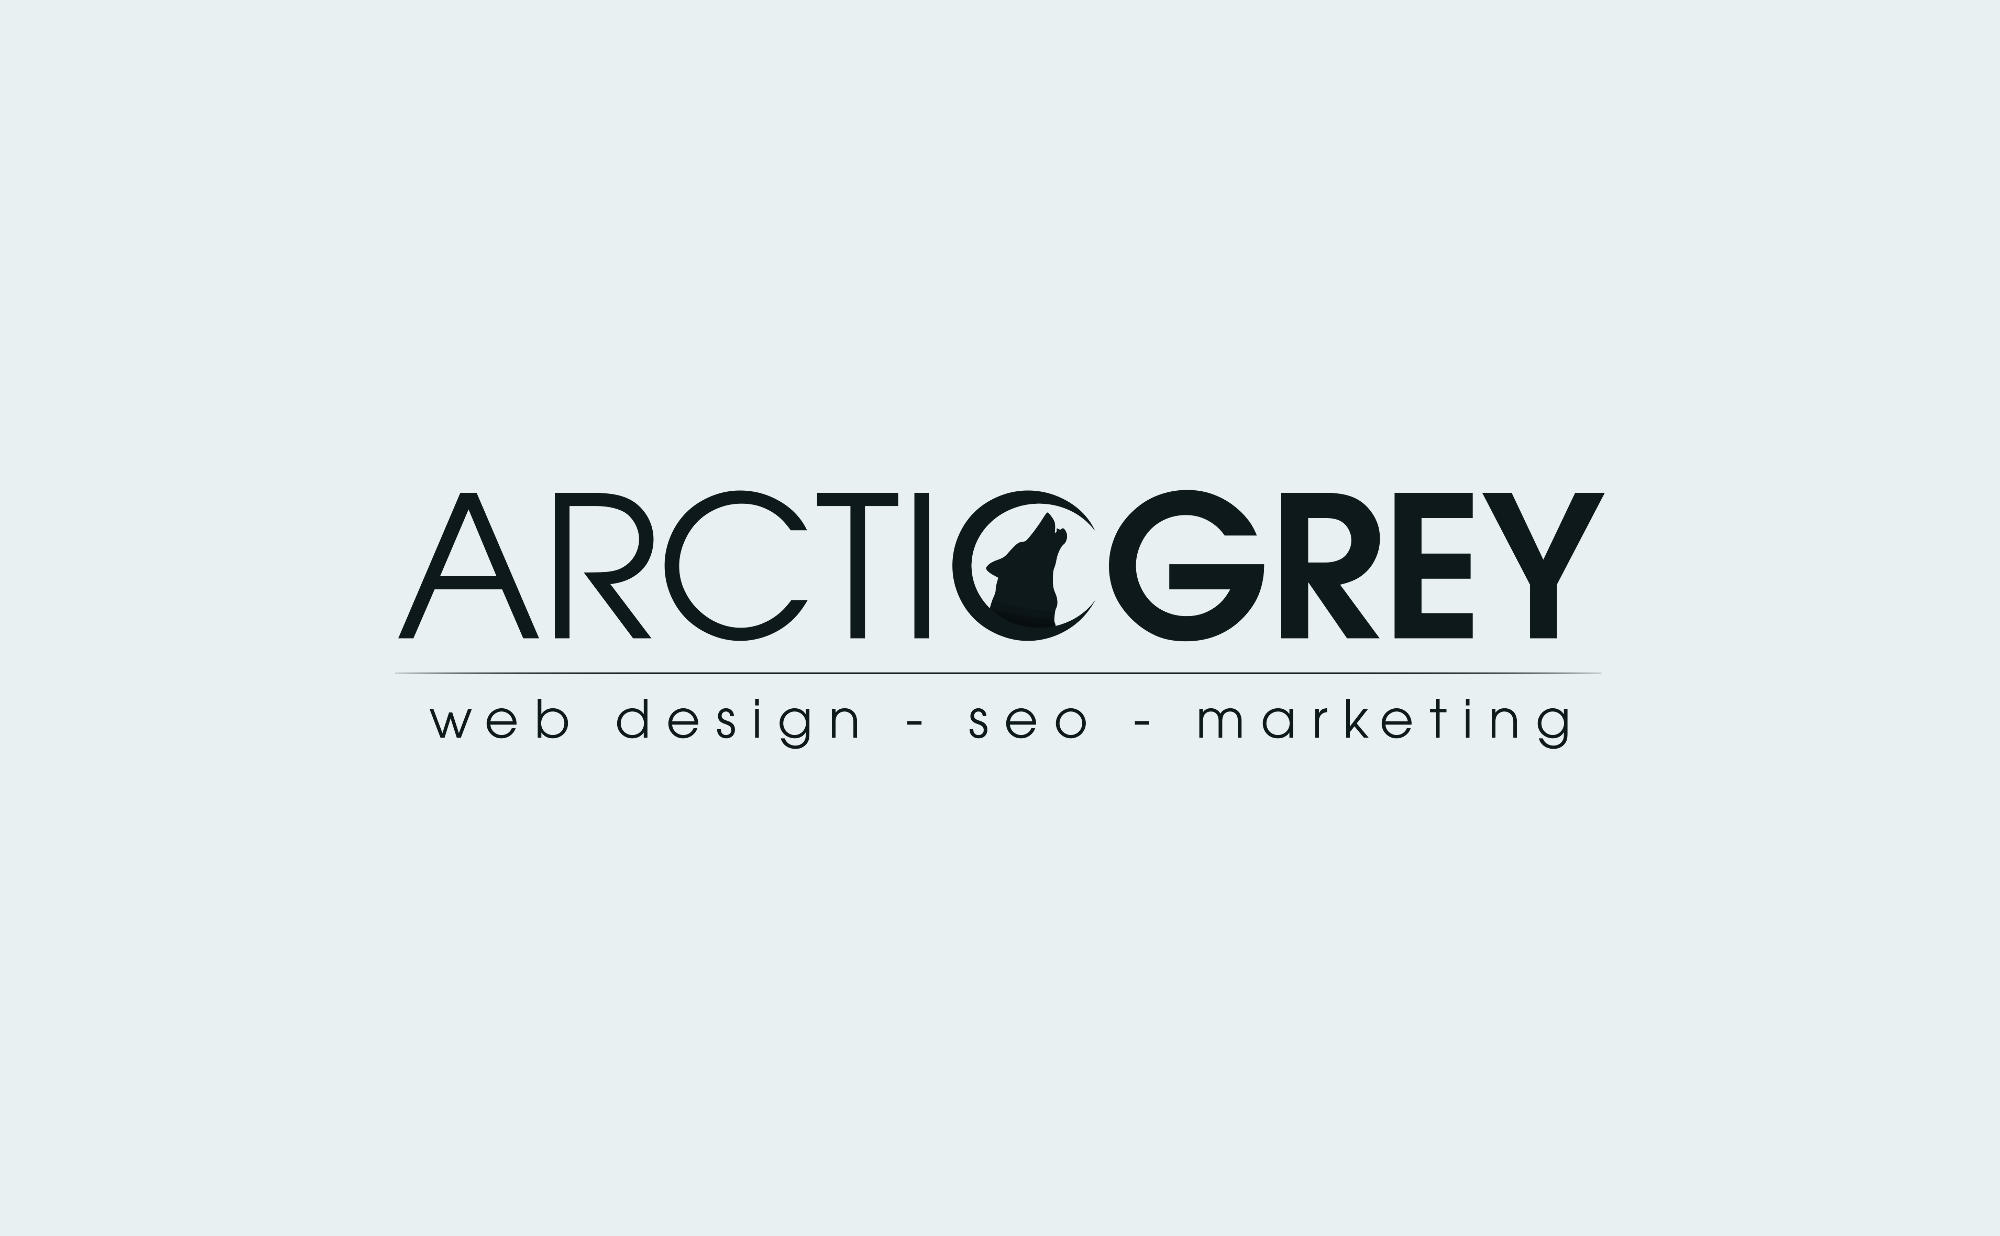 Top SEO Web Development Firm Logo: Arctic Grey Inc